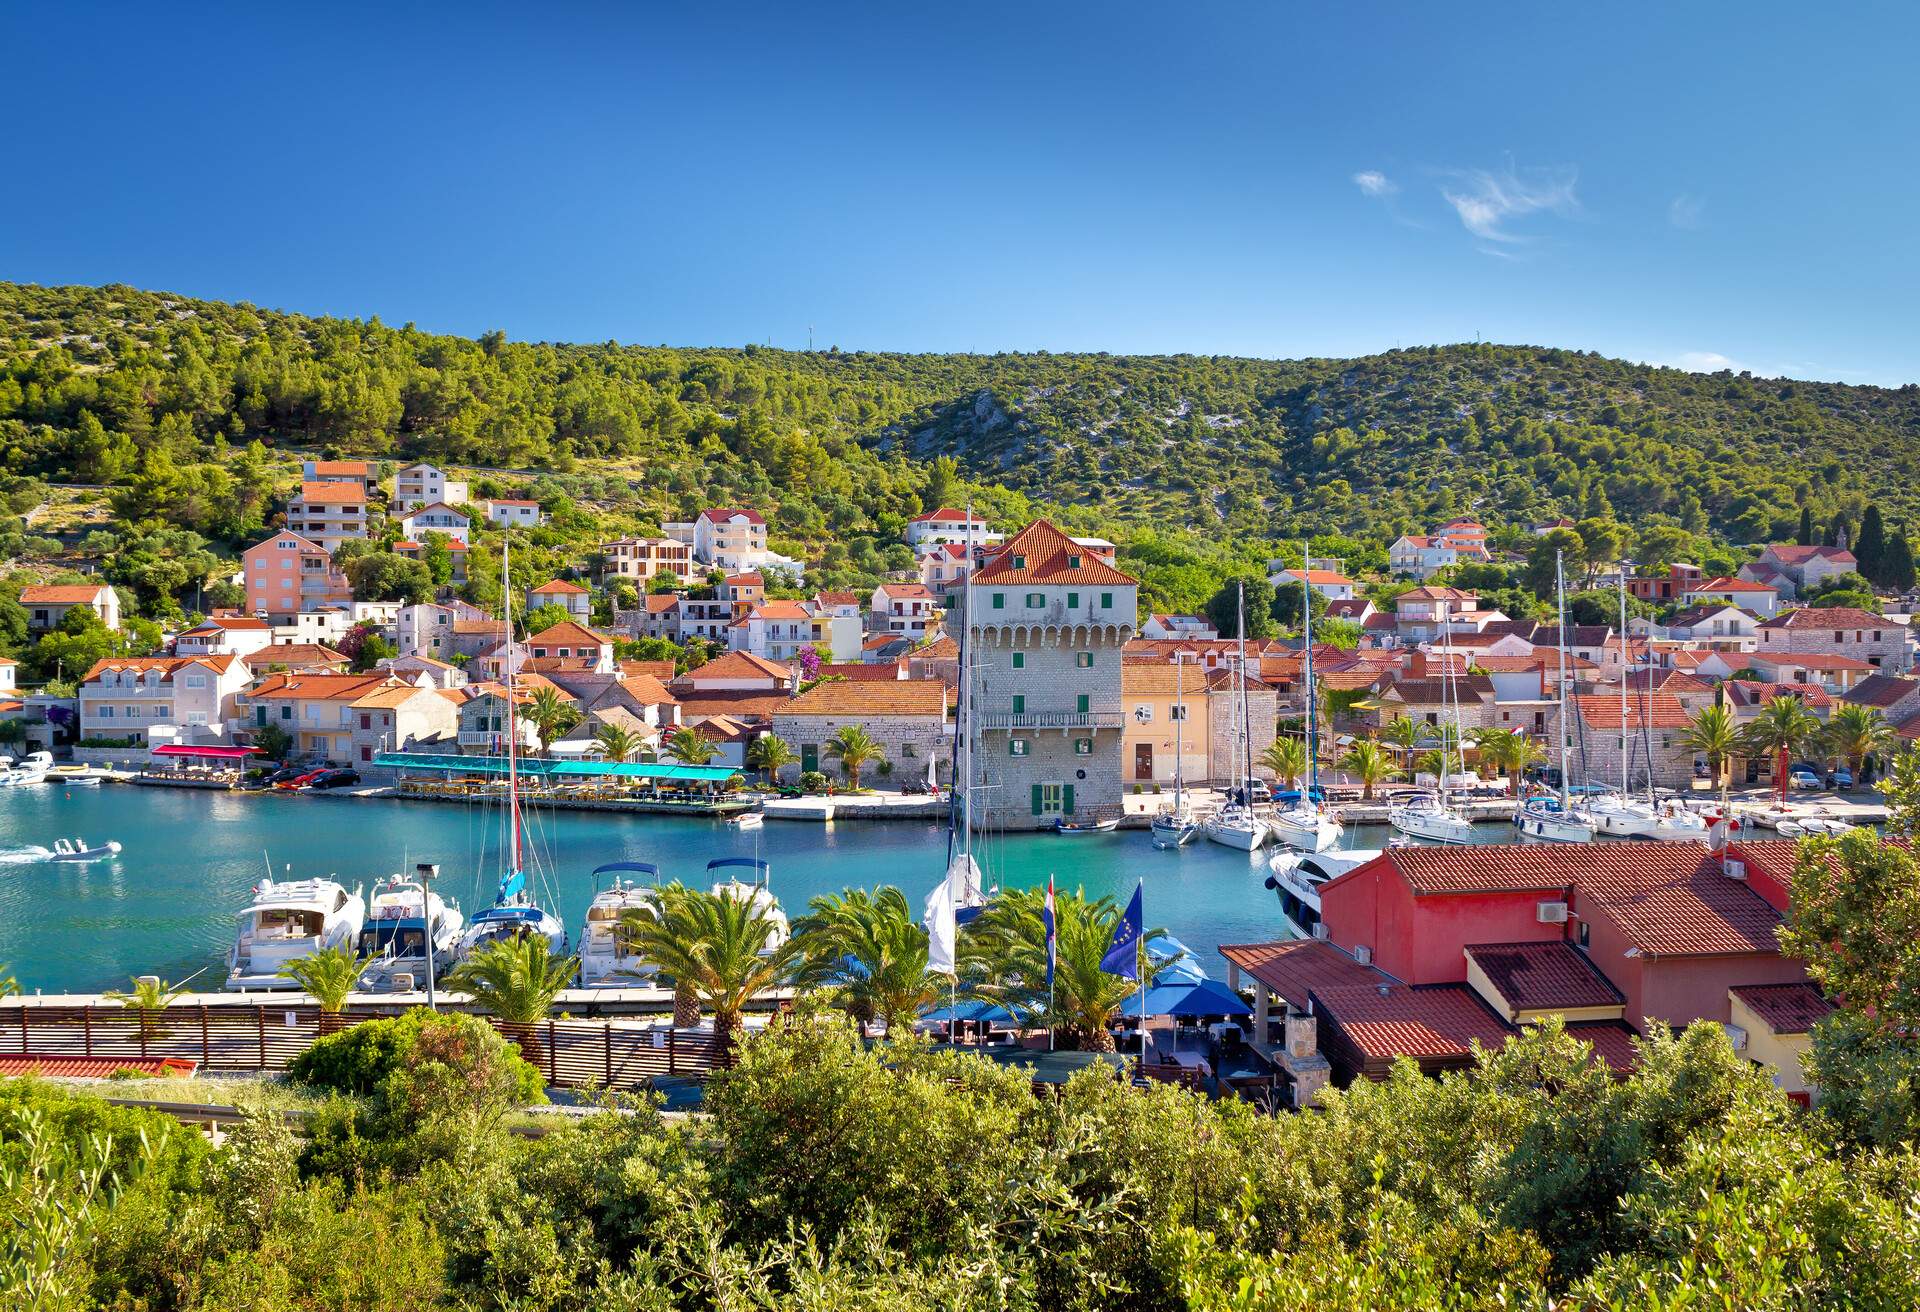 Adriatic village of Marina near Trogir, Dalmatia, Croatia